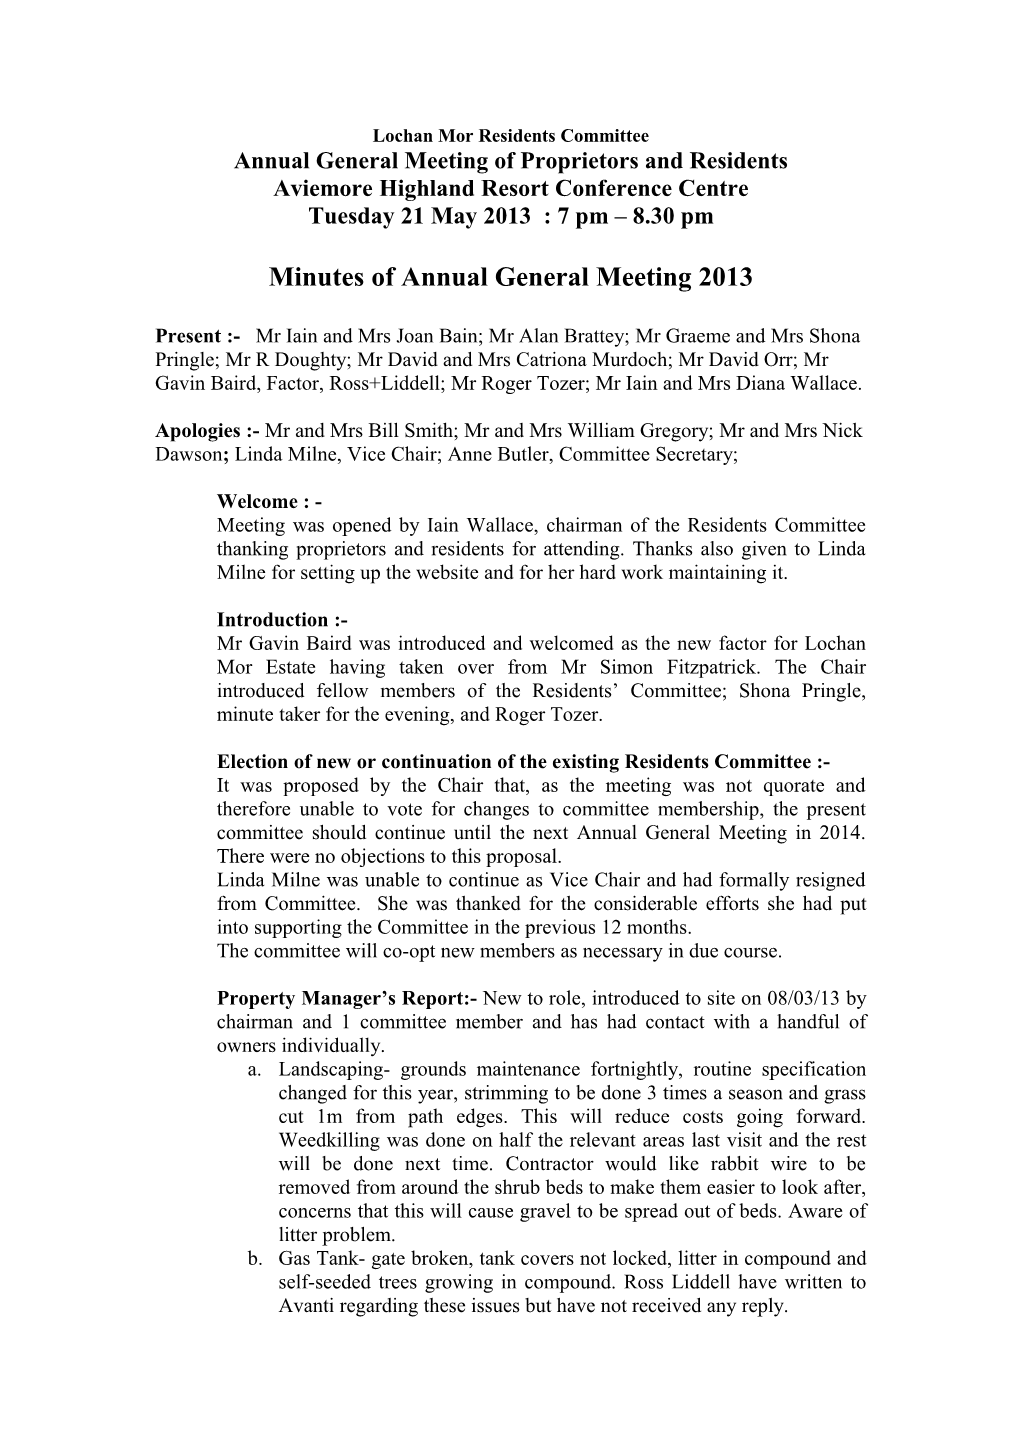 Lochan Mor Residents Committee AGM 21/05/13